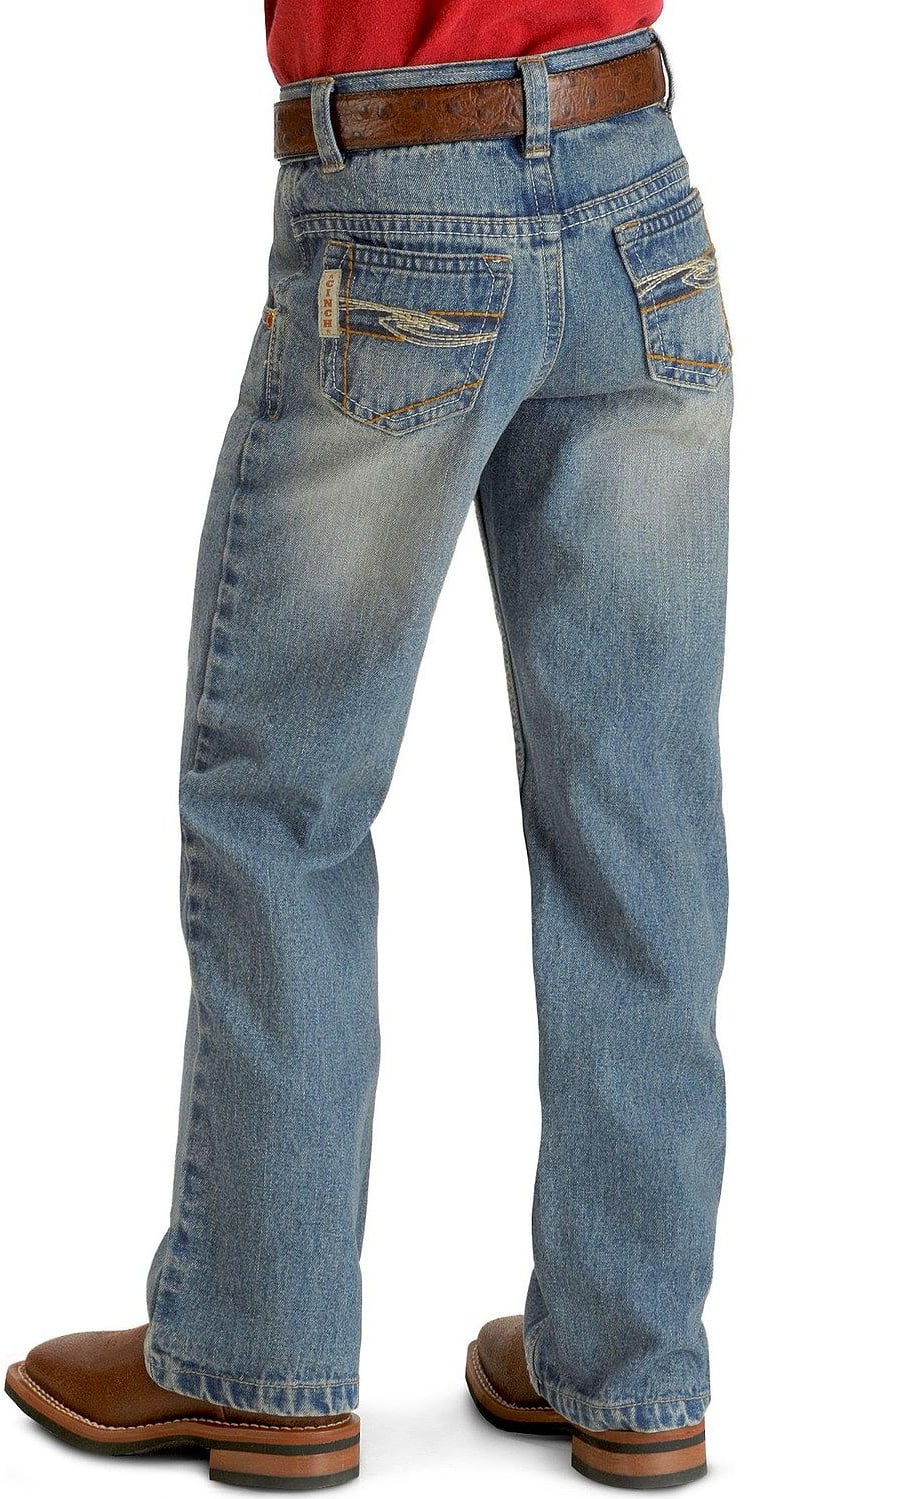 cinch boys' tanner slim cut jeans 4-7 - mb16941001 ind - Walmart.com